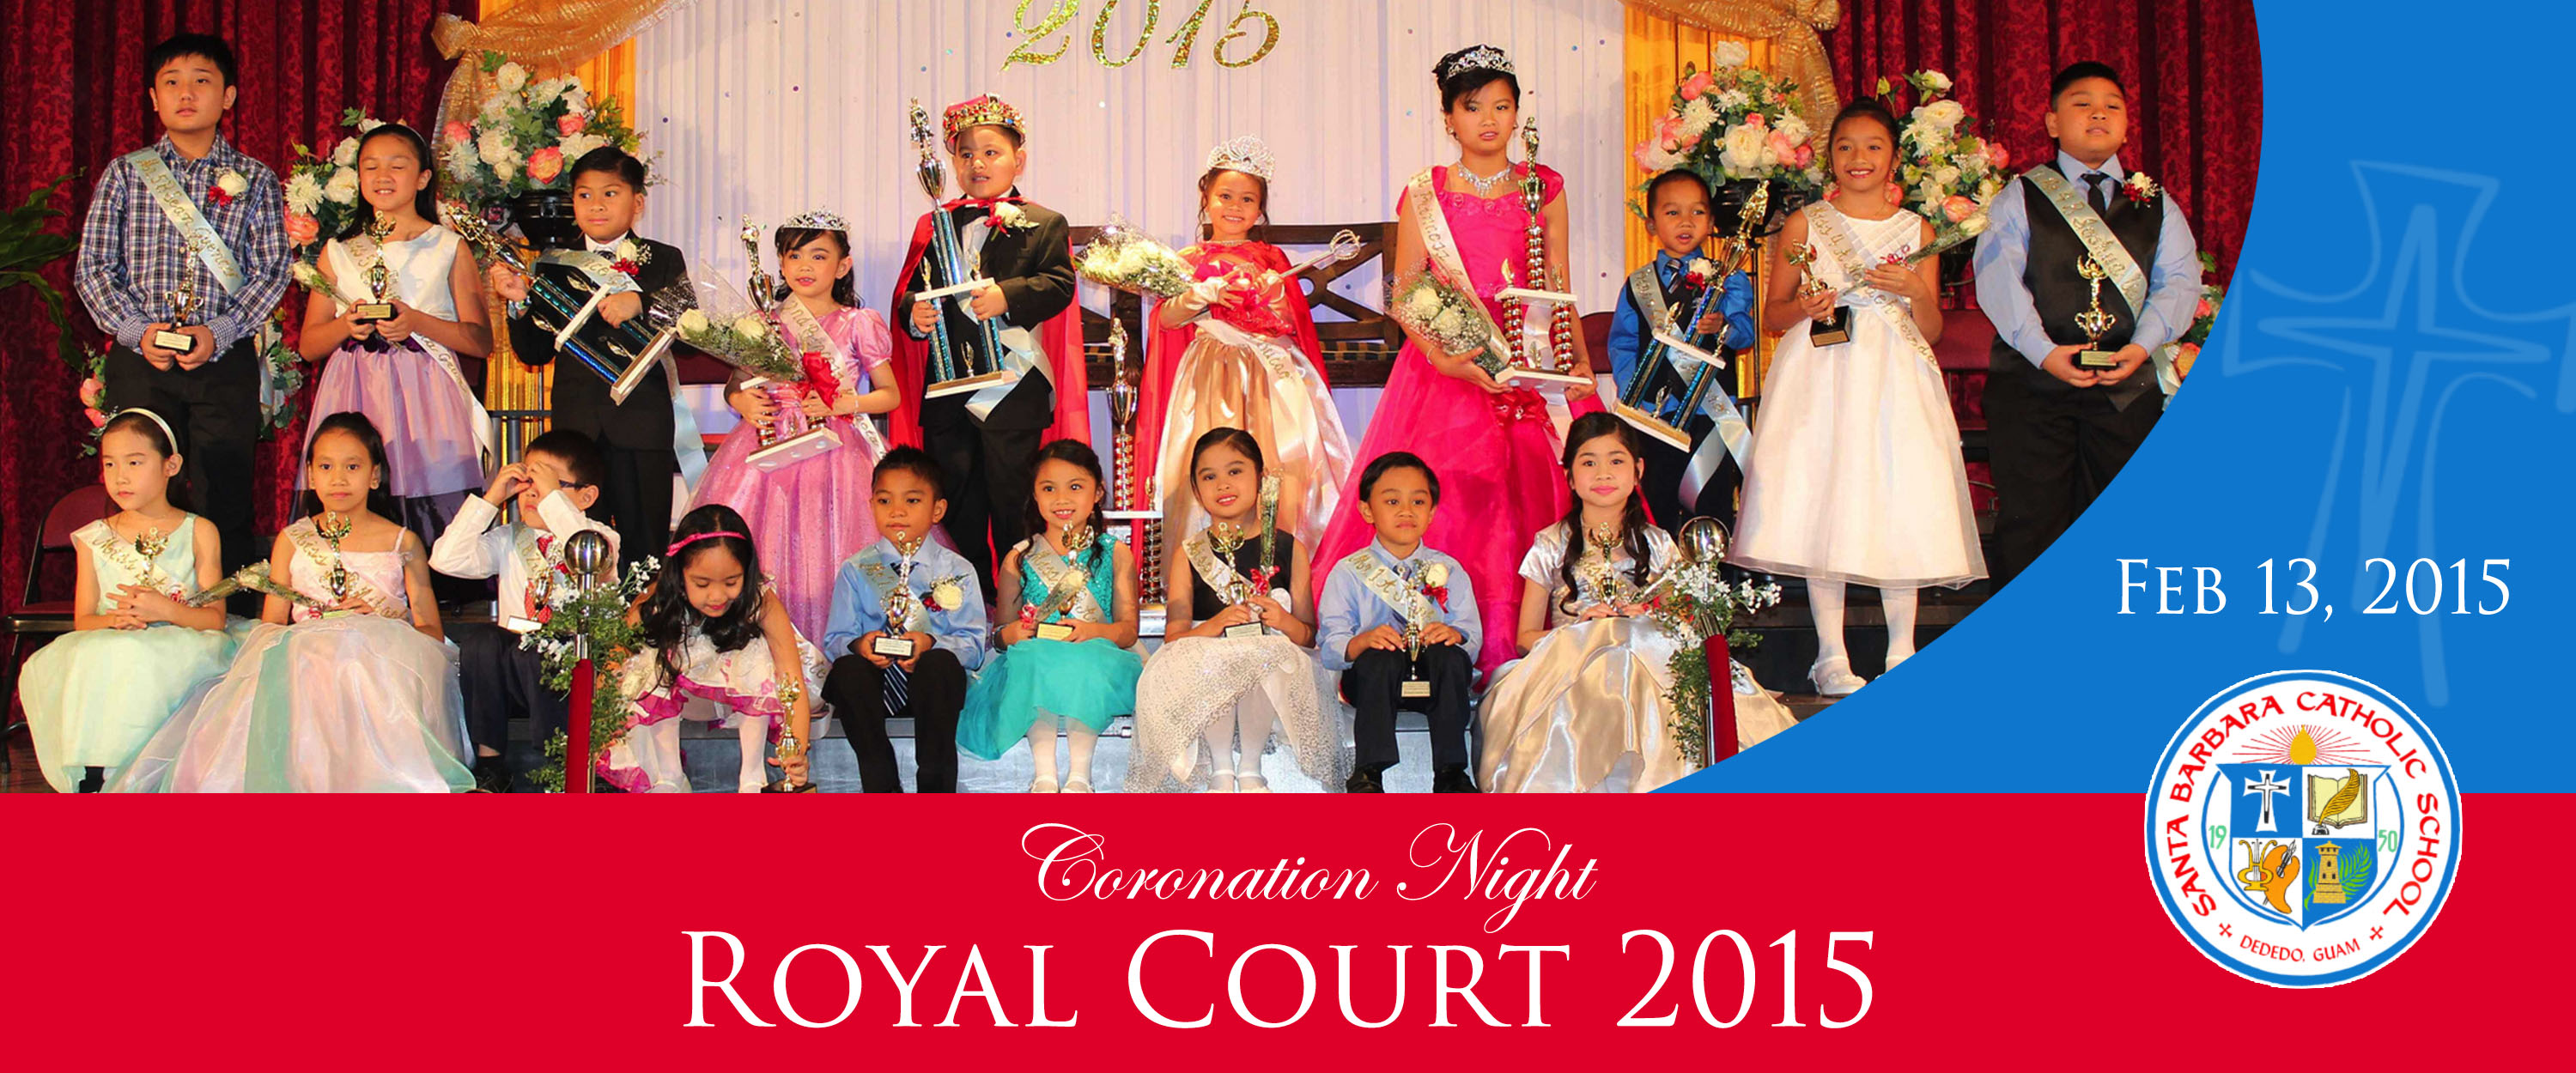 royal court 2015